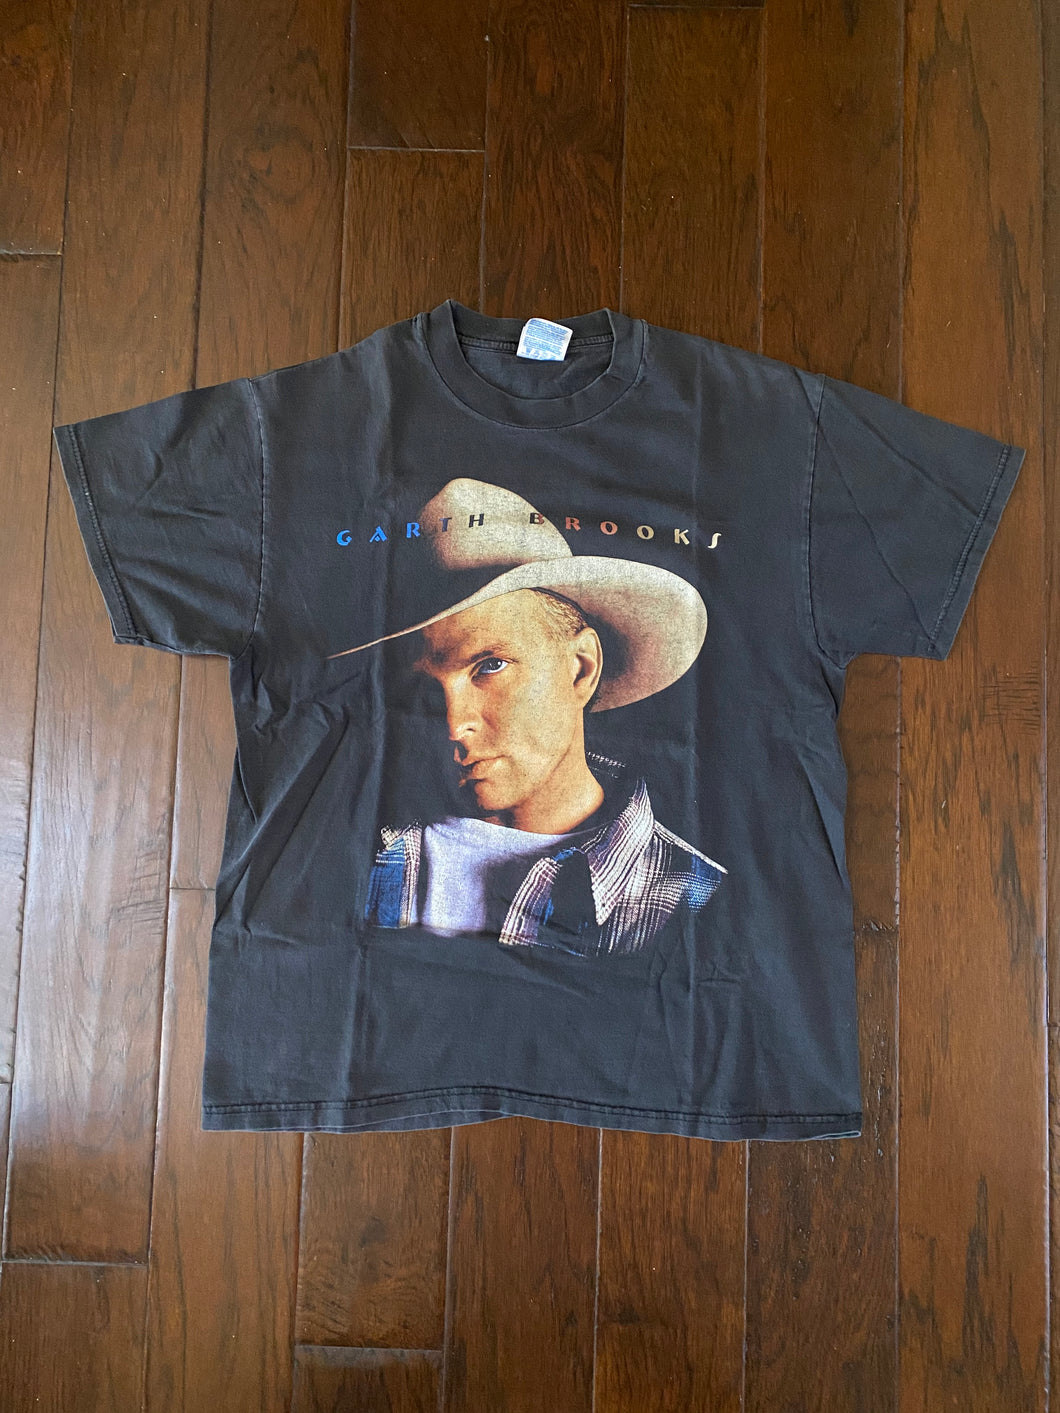 Garth Brooks 1995 “Fresh Horses World Tour” Vintage Distressed T-shirt